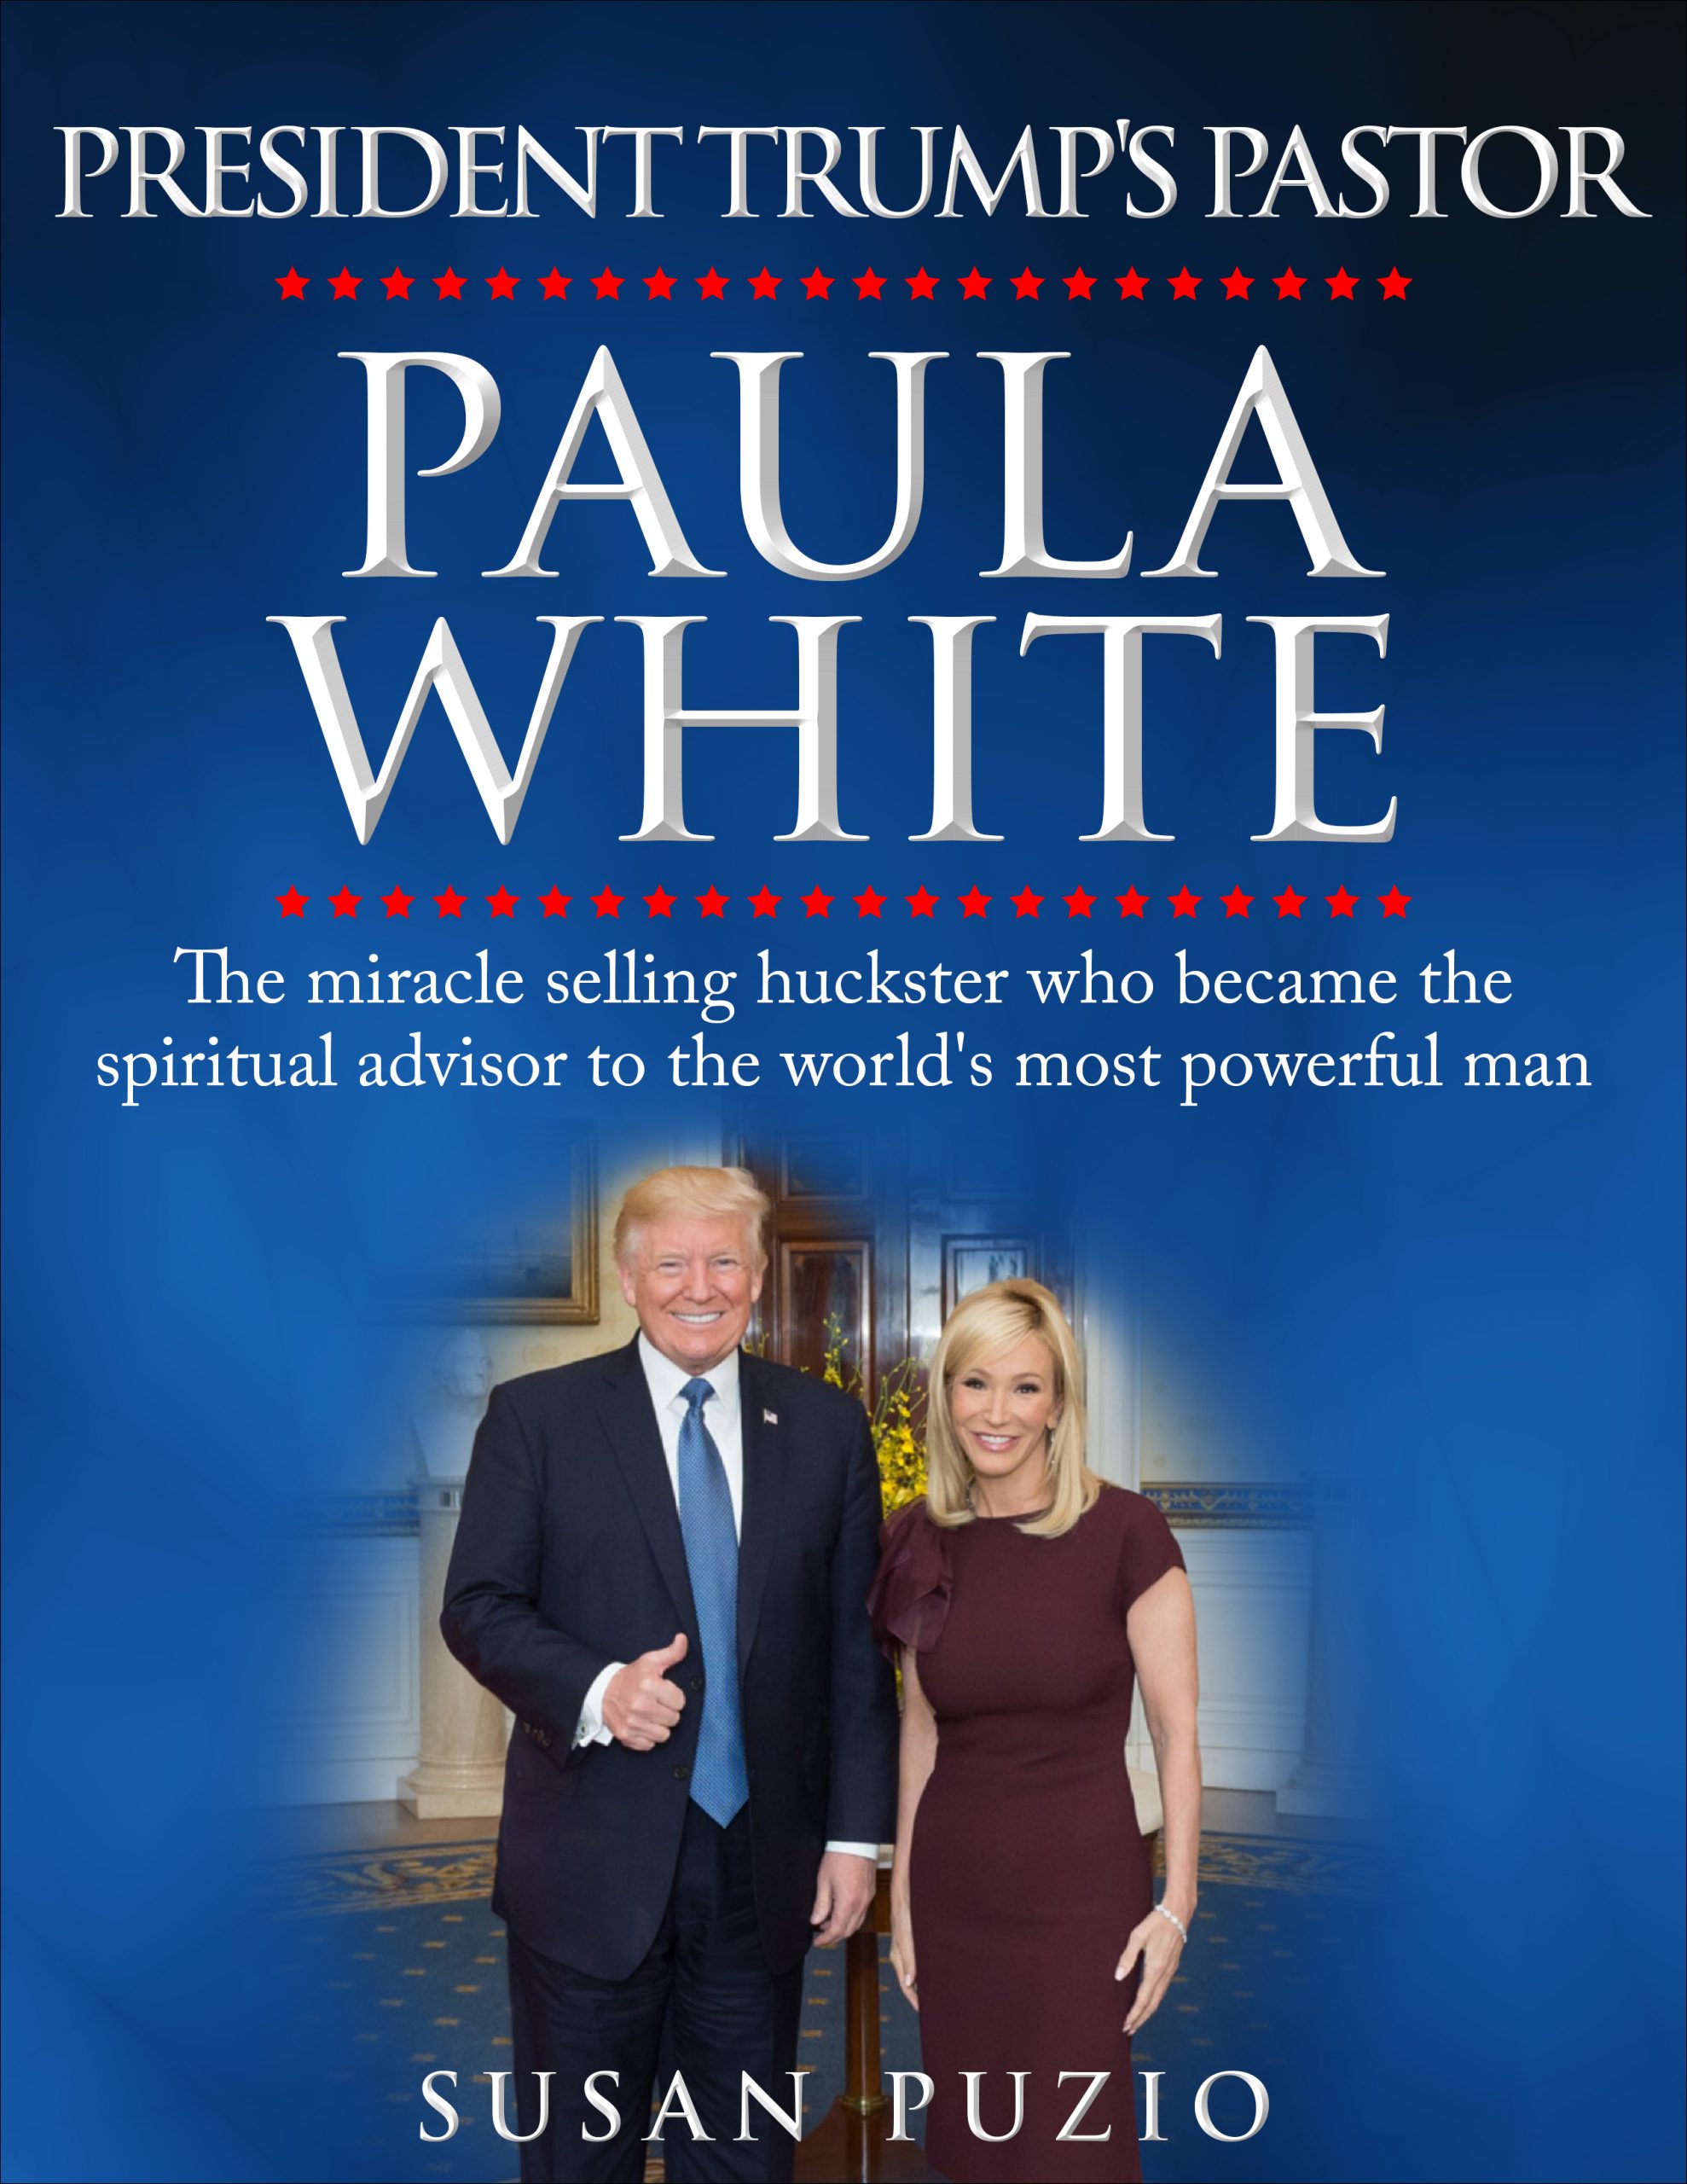 President Trump’s Pastor Paula White available in Paperback